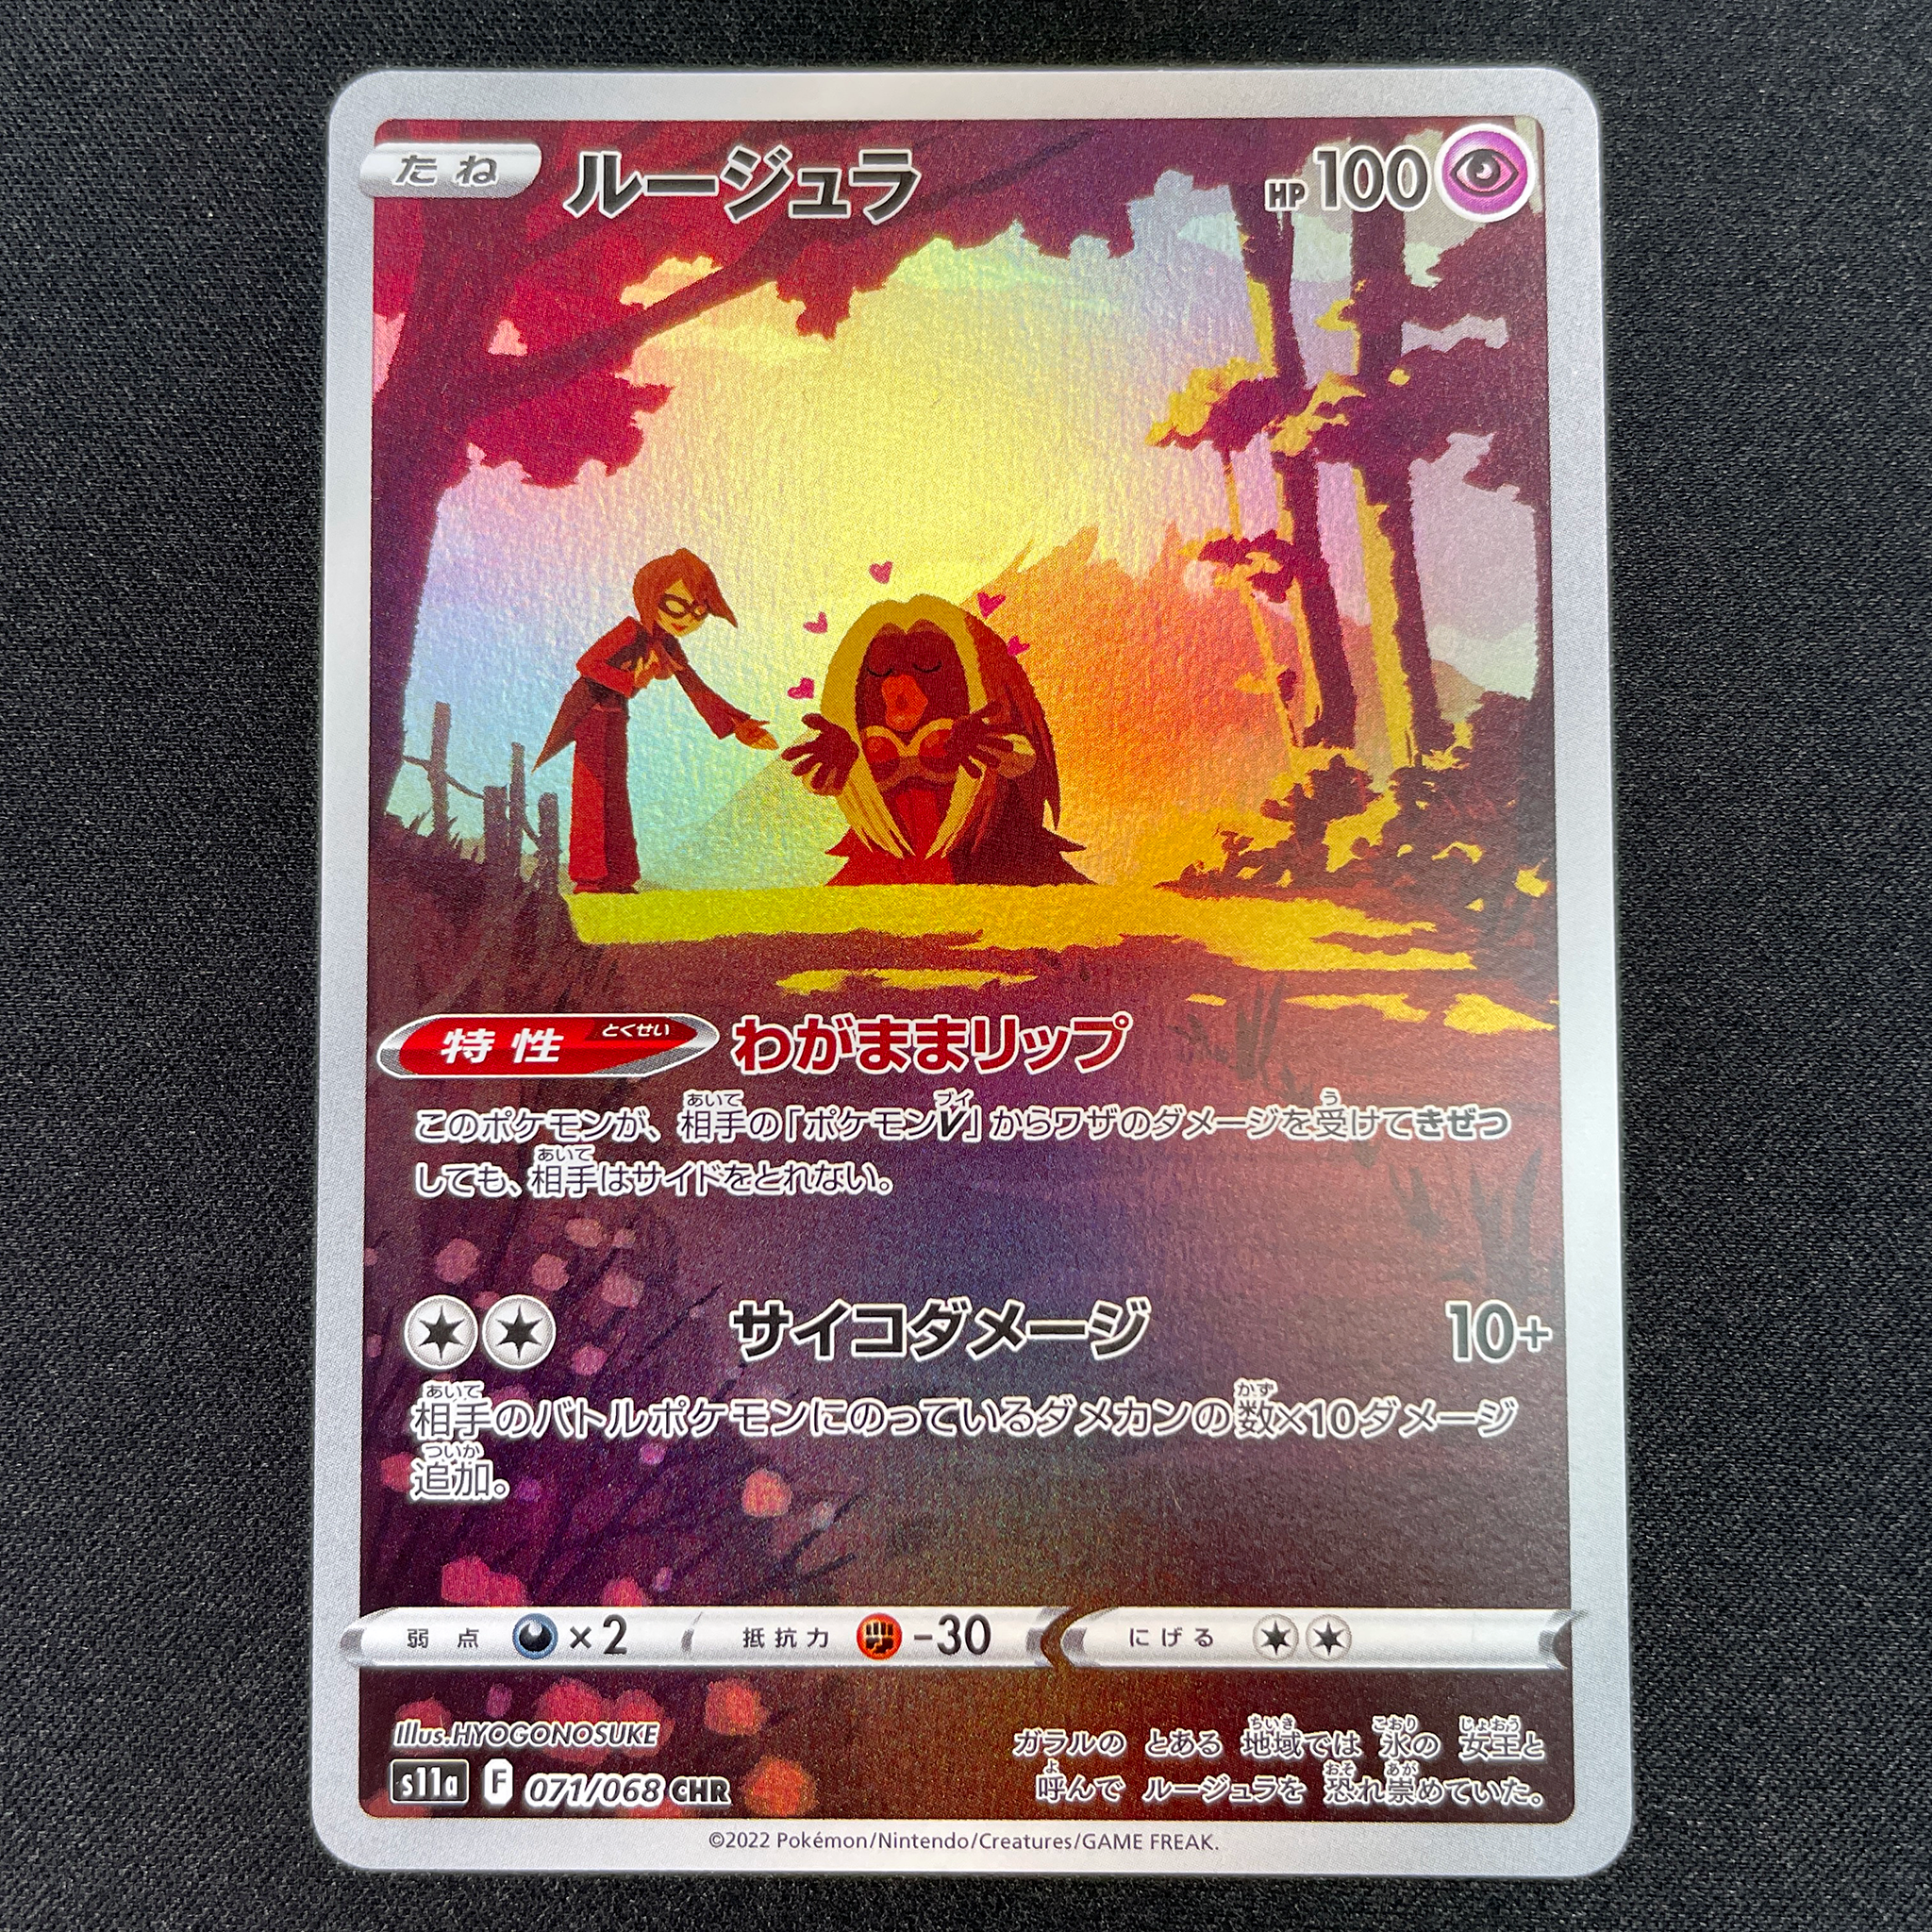 POKÉMON CARD GAME Sword & Shield Expansion pack ｢Incandescent Arcana｣  POKÉMON CARD GAME s11a 071/068 Character Hyper Rare card  Jynx